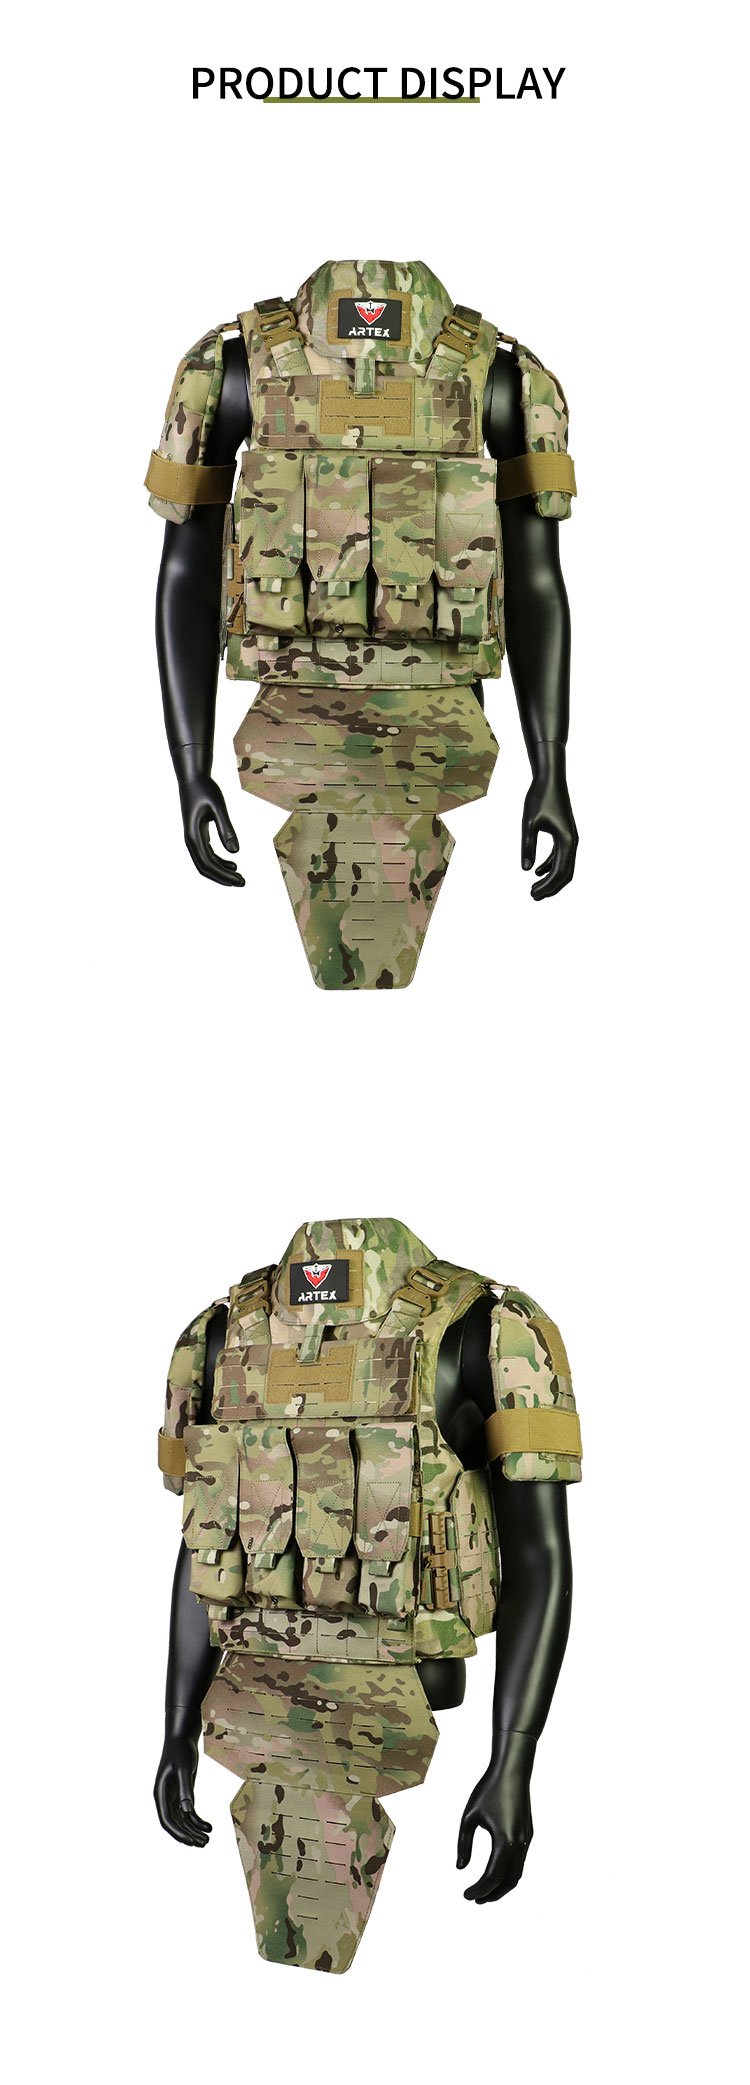 Artex Armor Vest